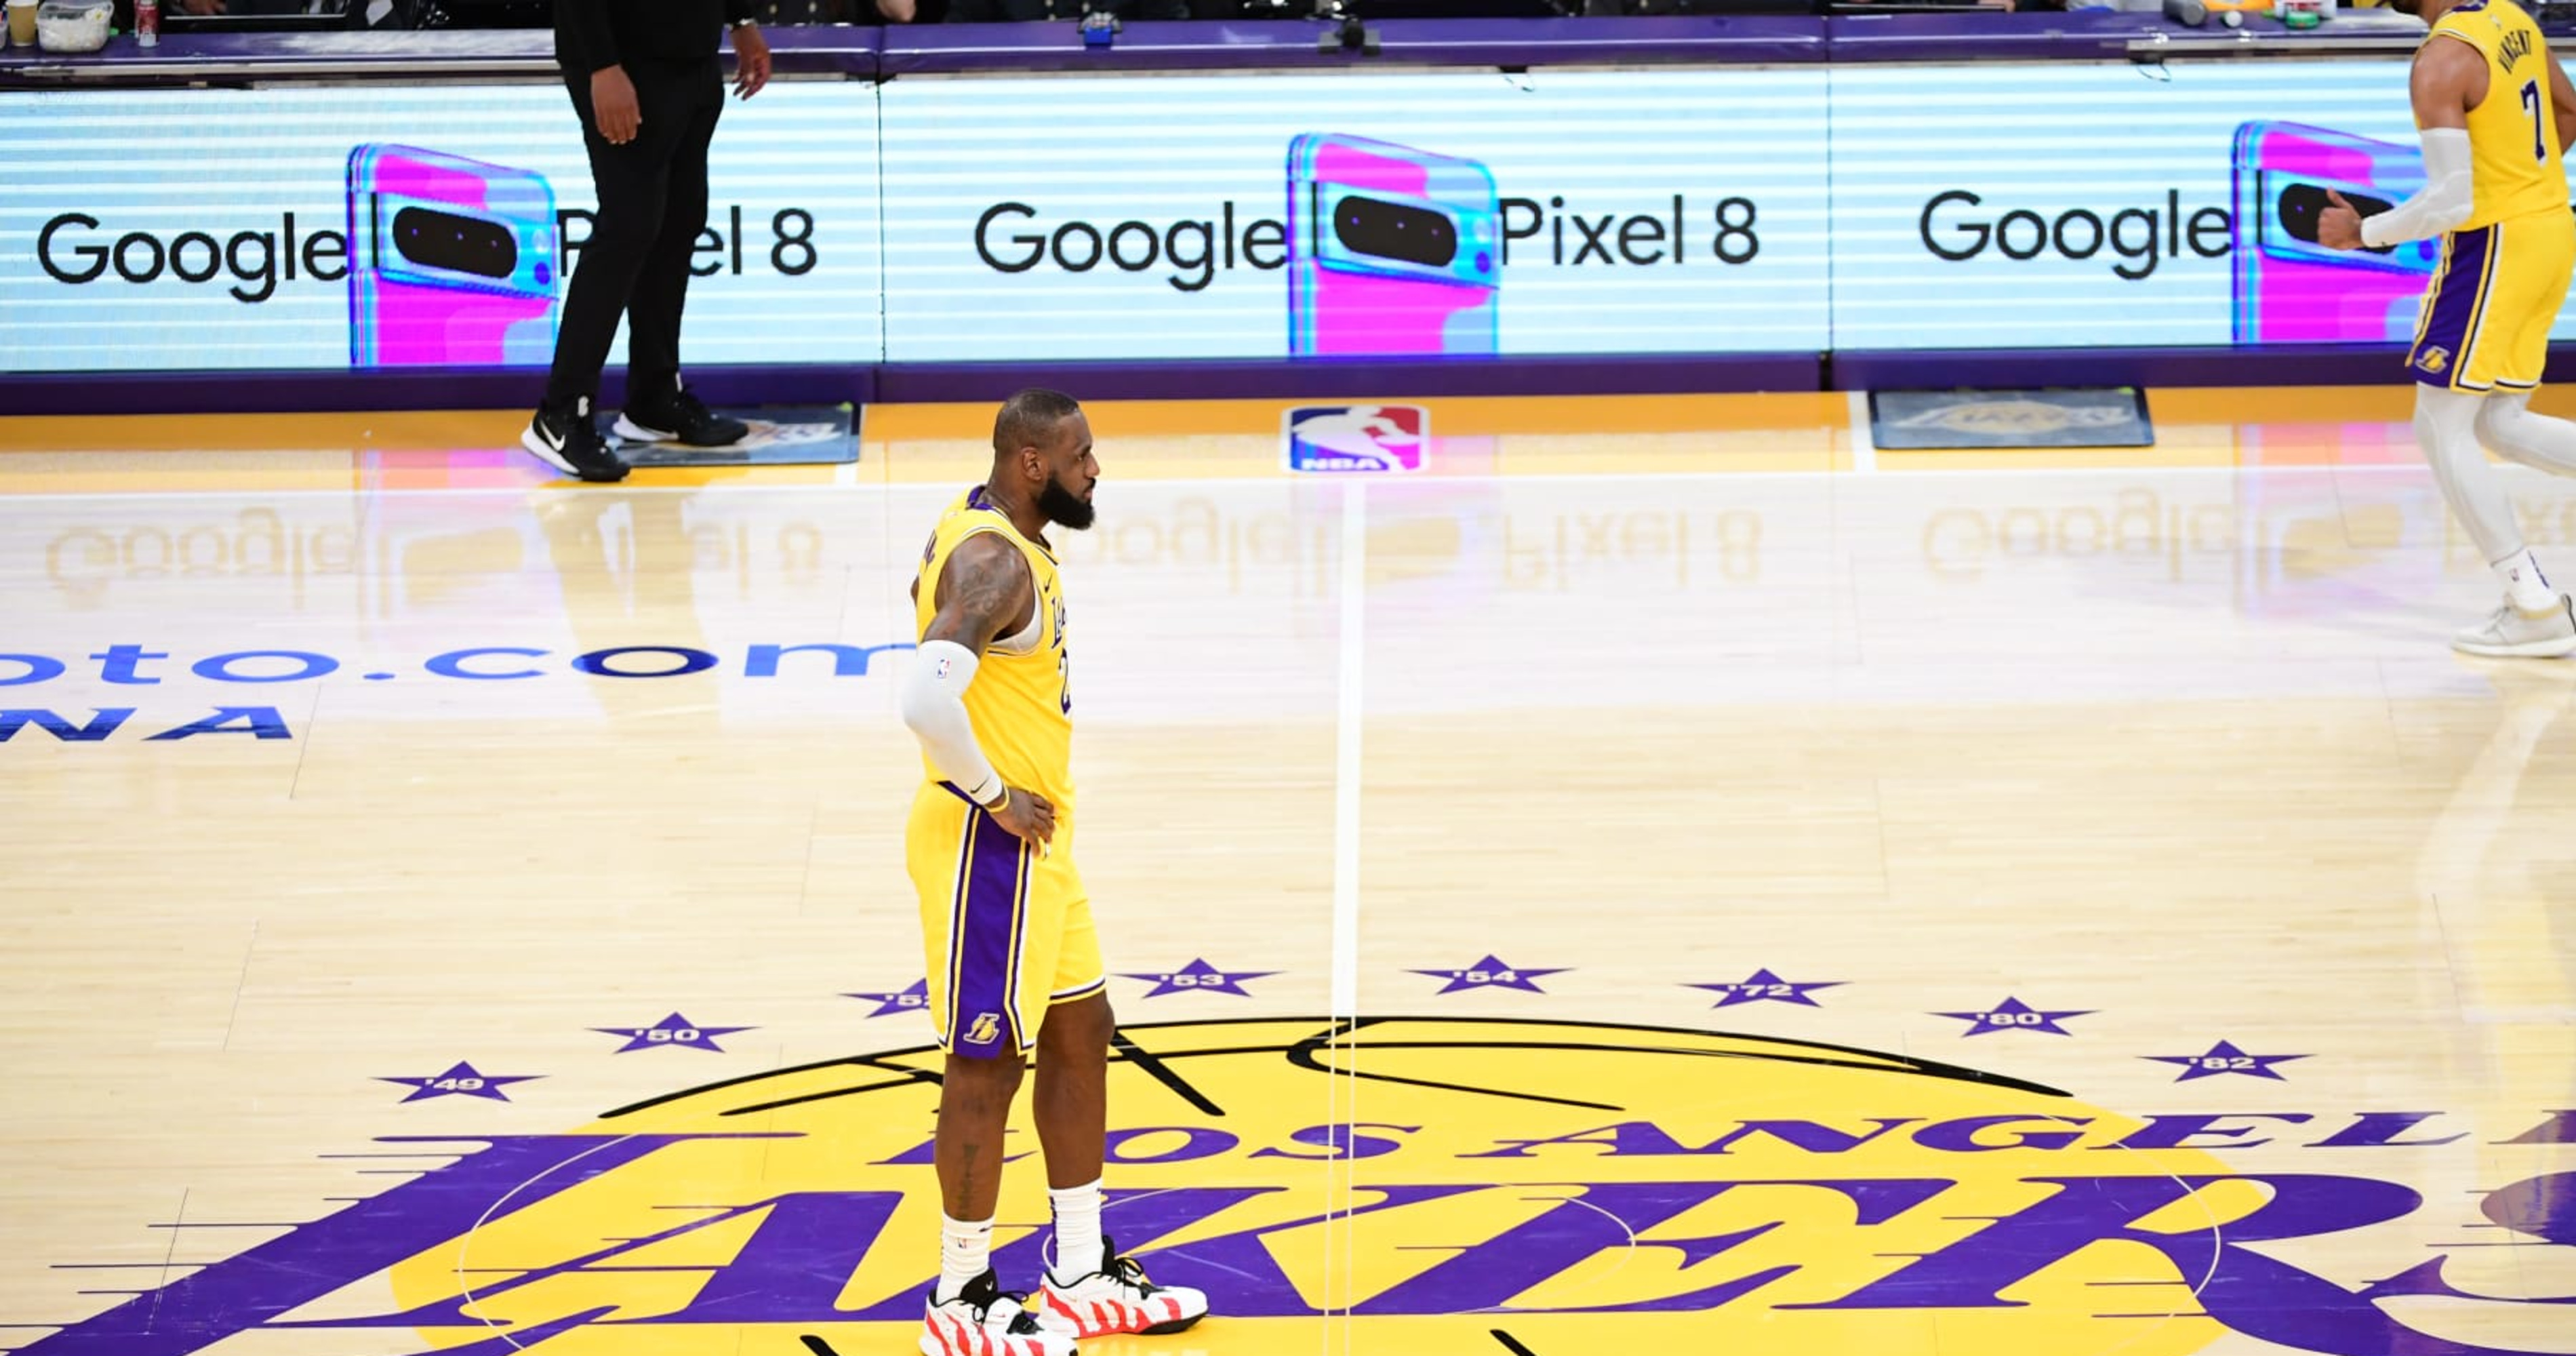 Imagining LA Lakers' Path Forward Without LeBron James